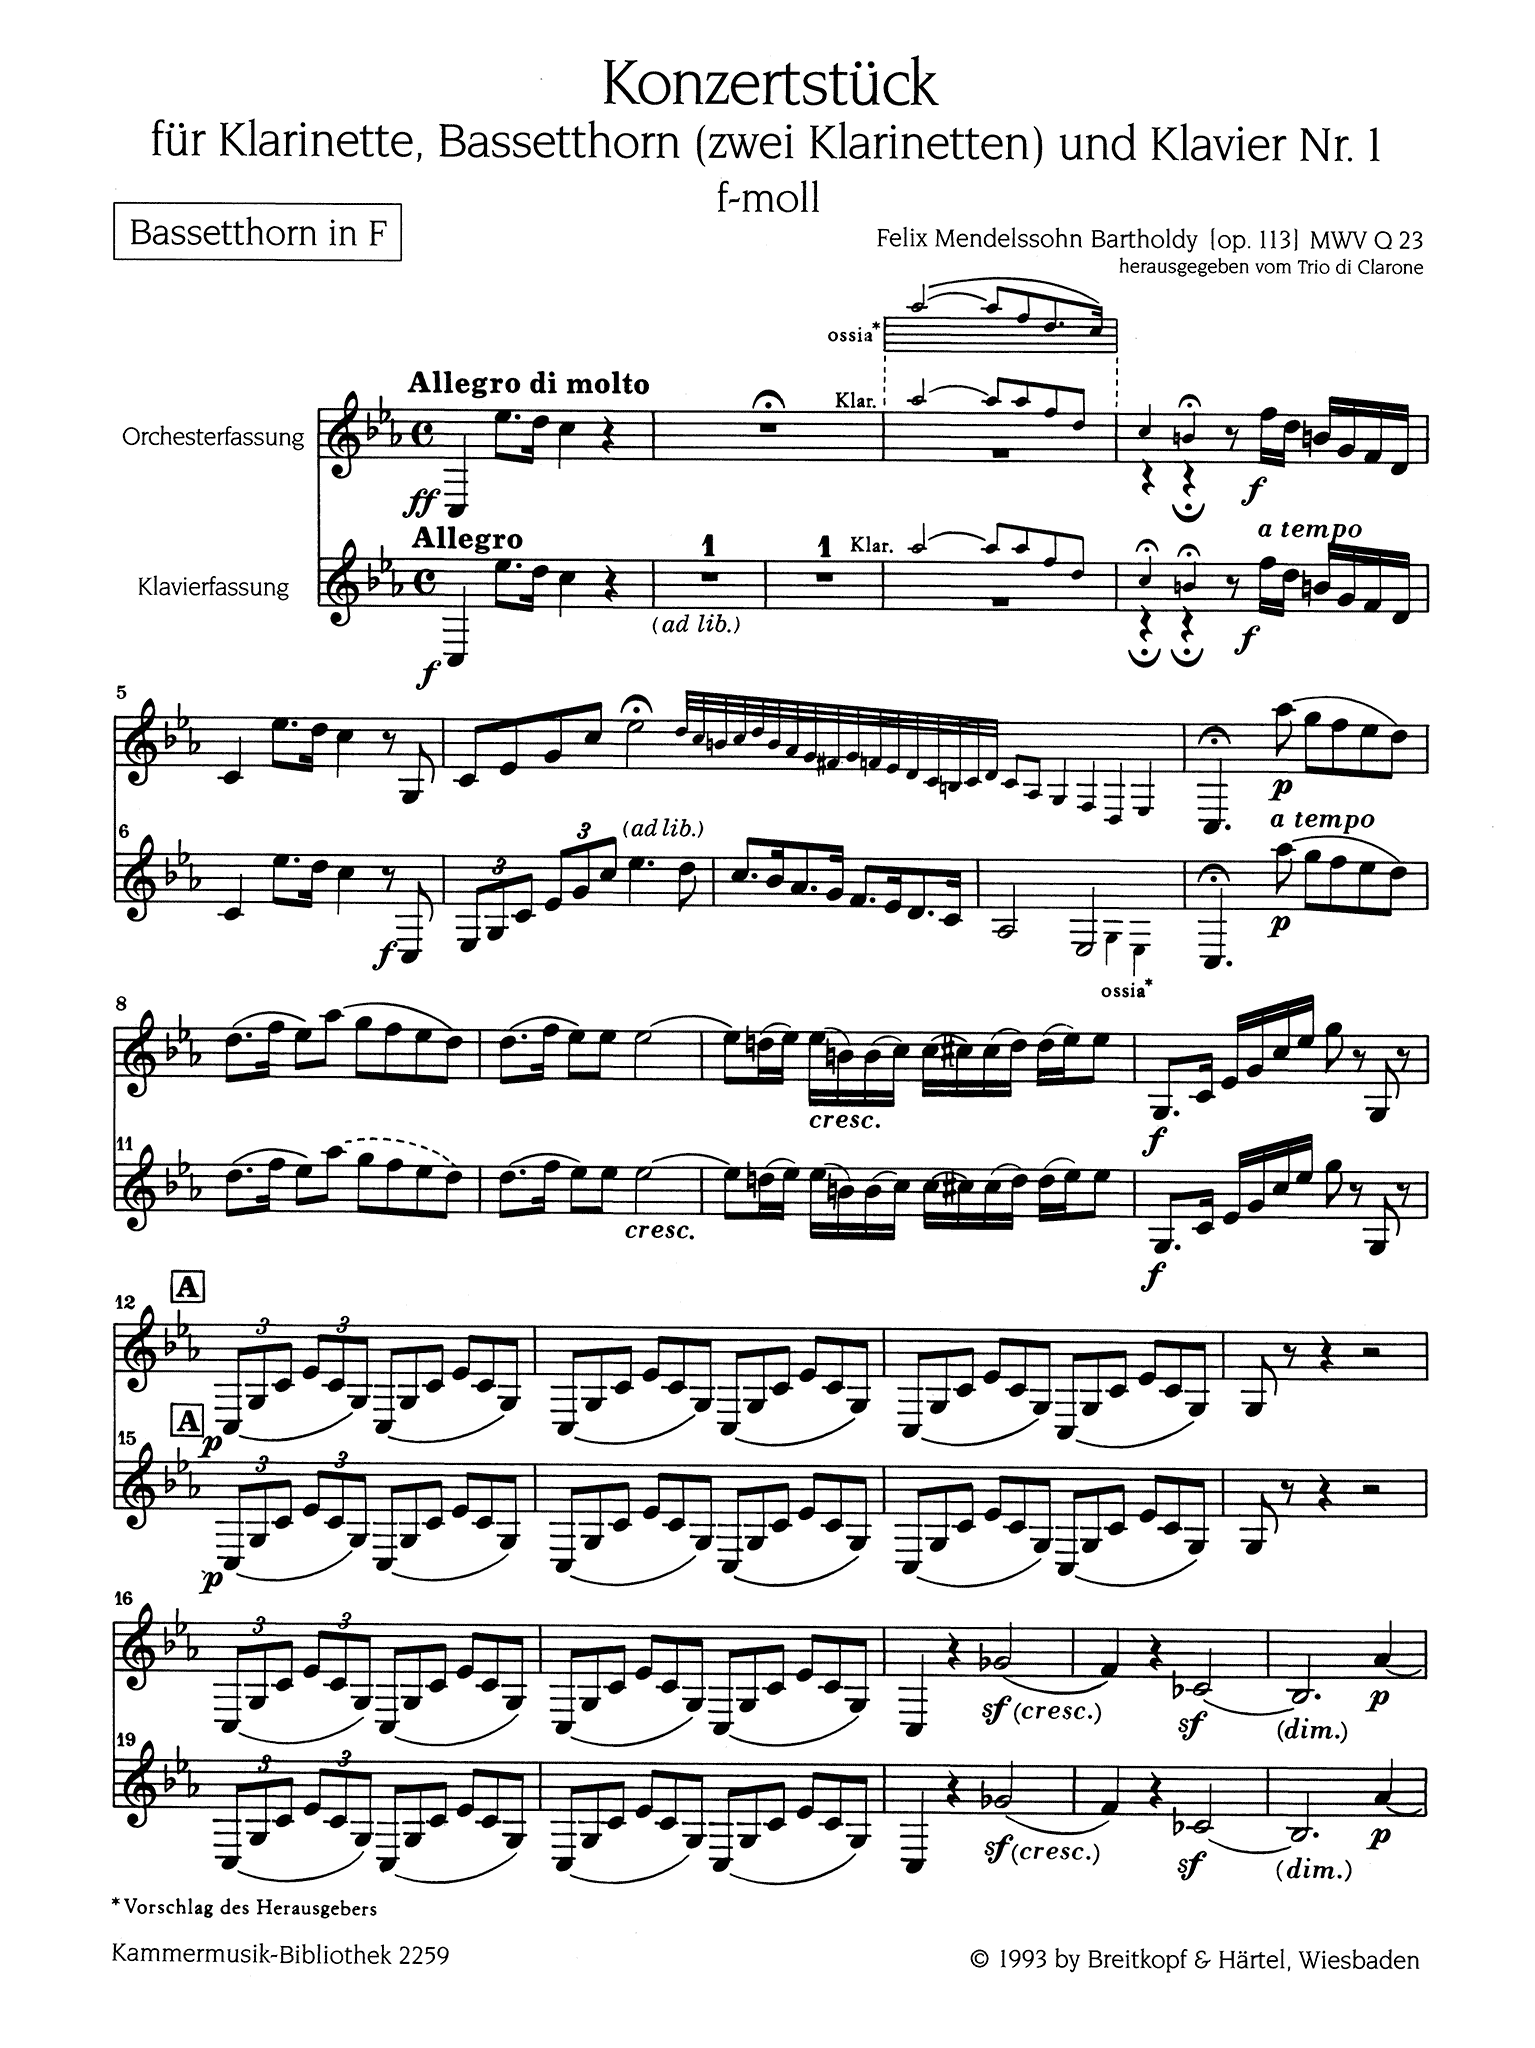 Concertpiece No. 1 in F Minor, Op. 113 Basset Horn solo part